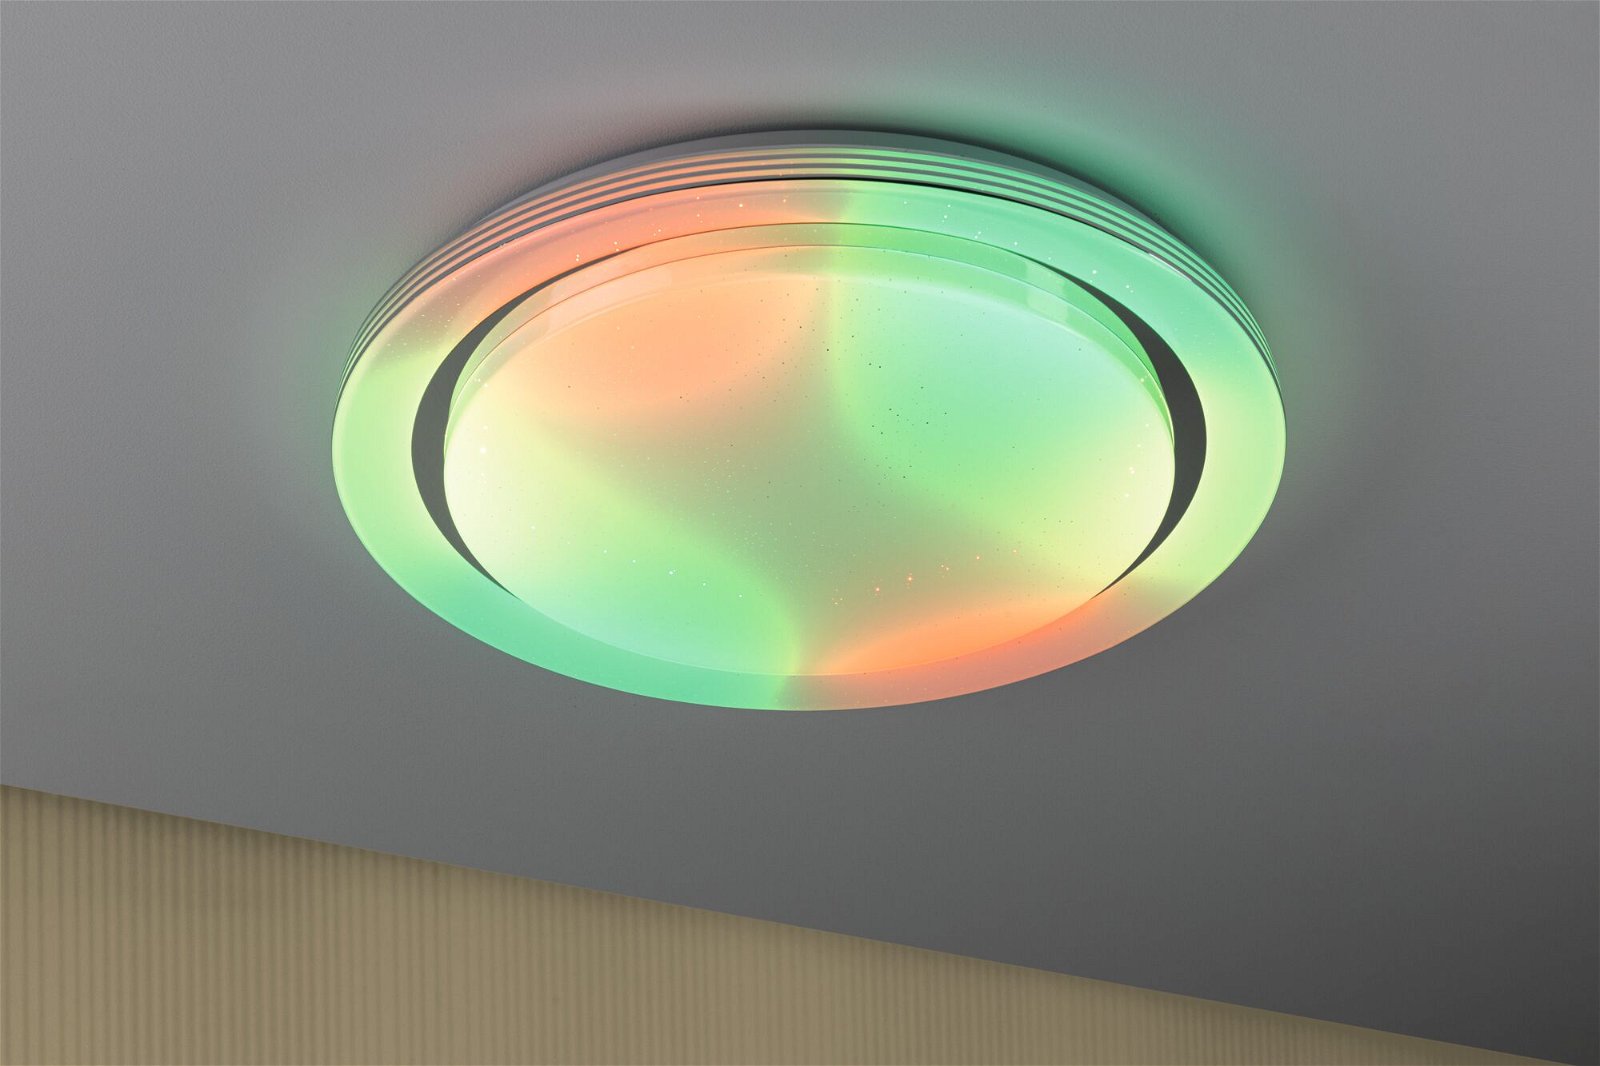 LED-plafondlamp Rainbow met regenboogeffect RGBW+ 2800lm 230V 38,5W dimbaar Chroom/Wit